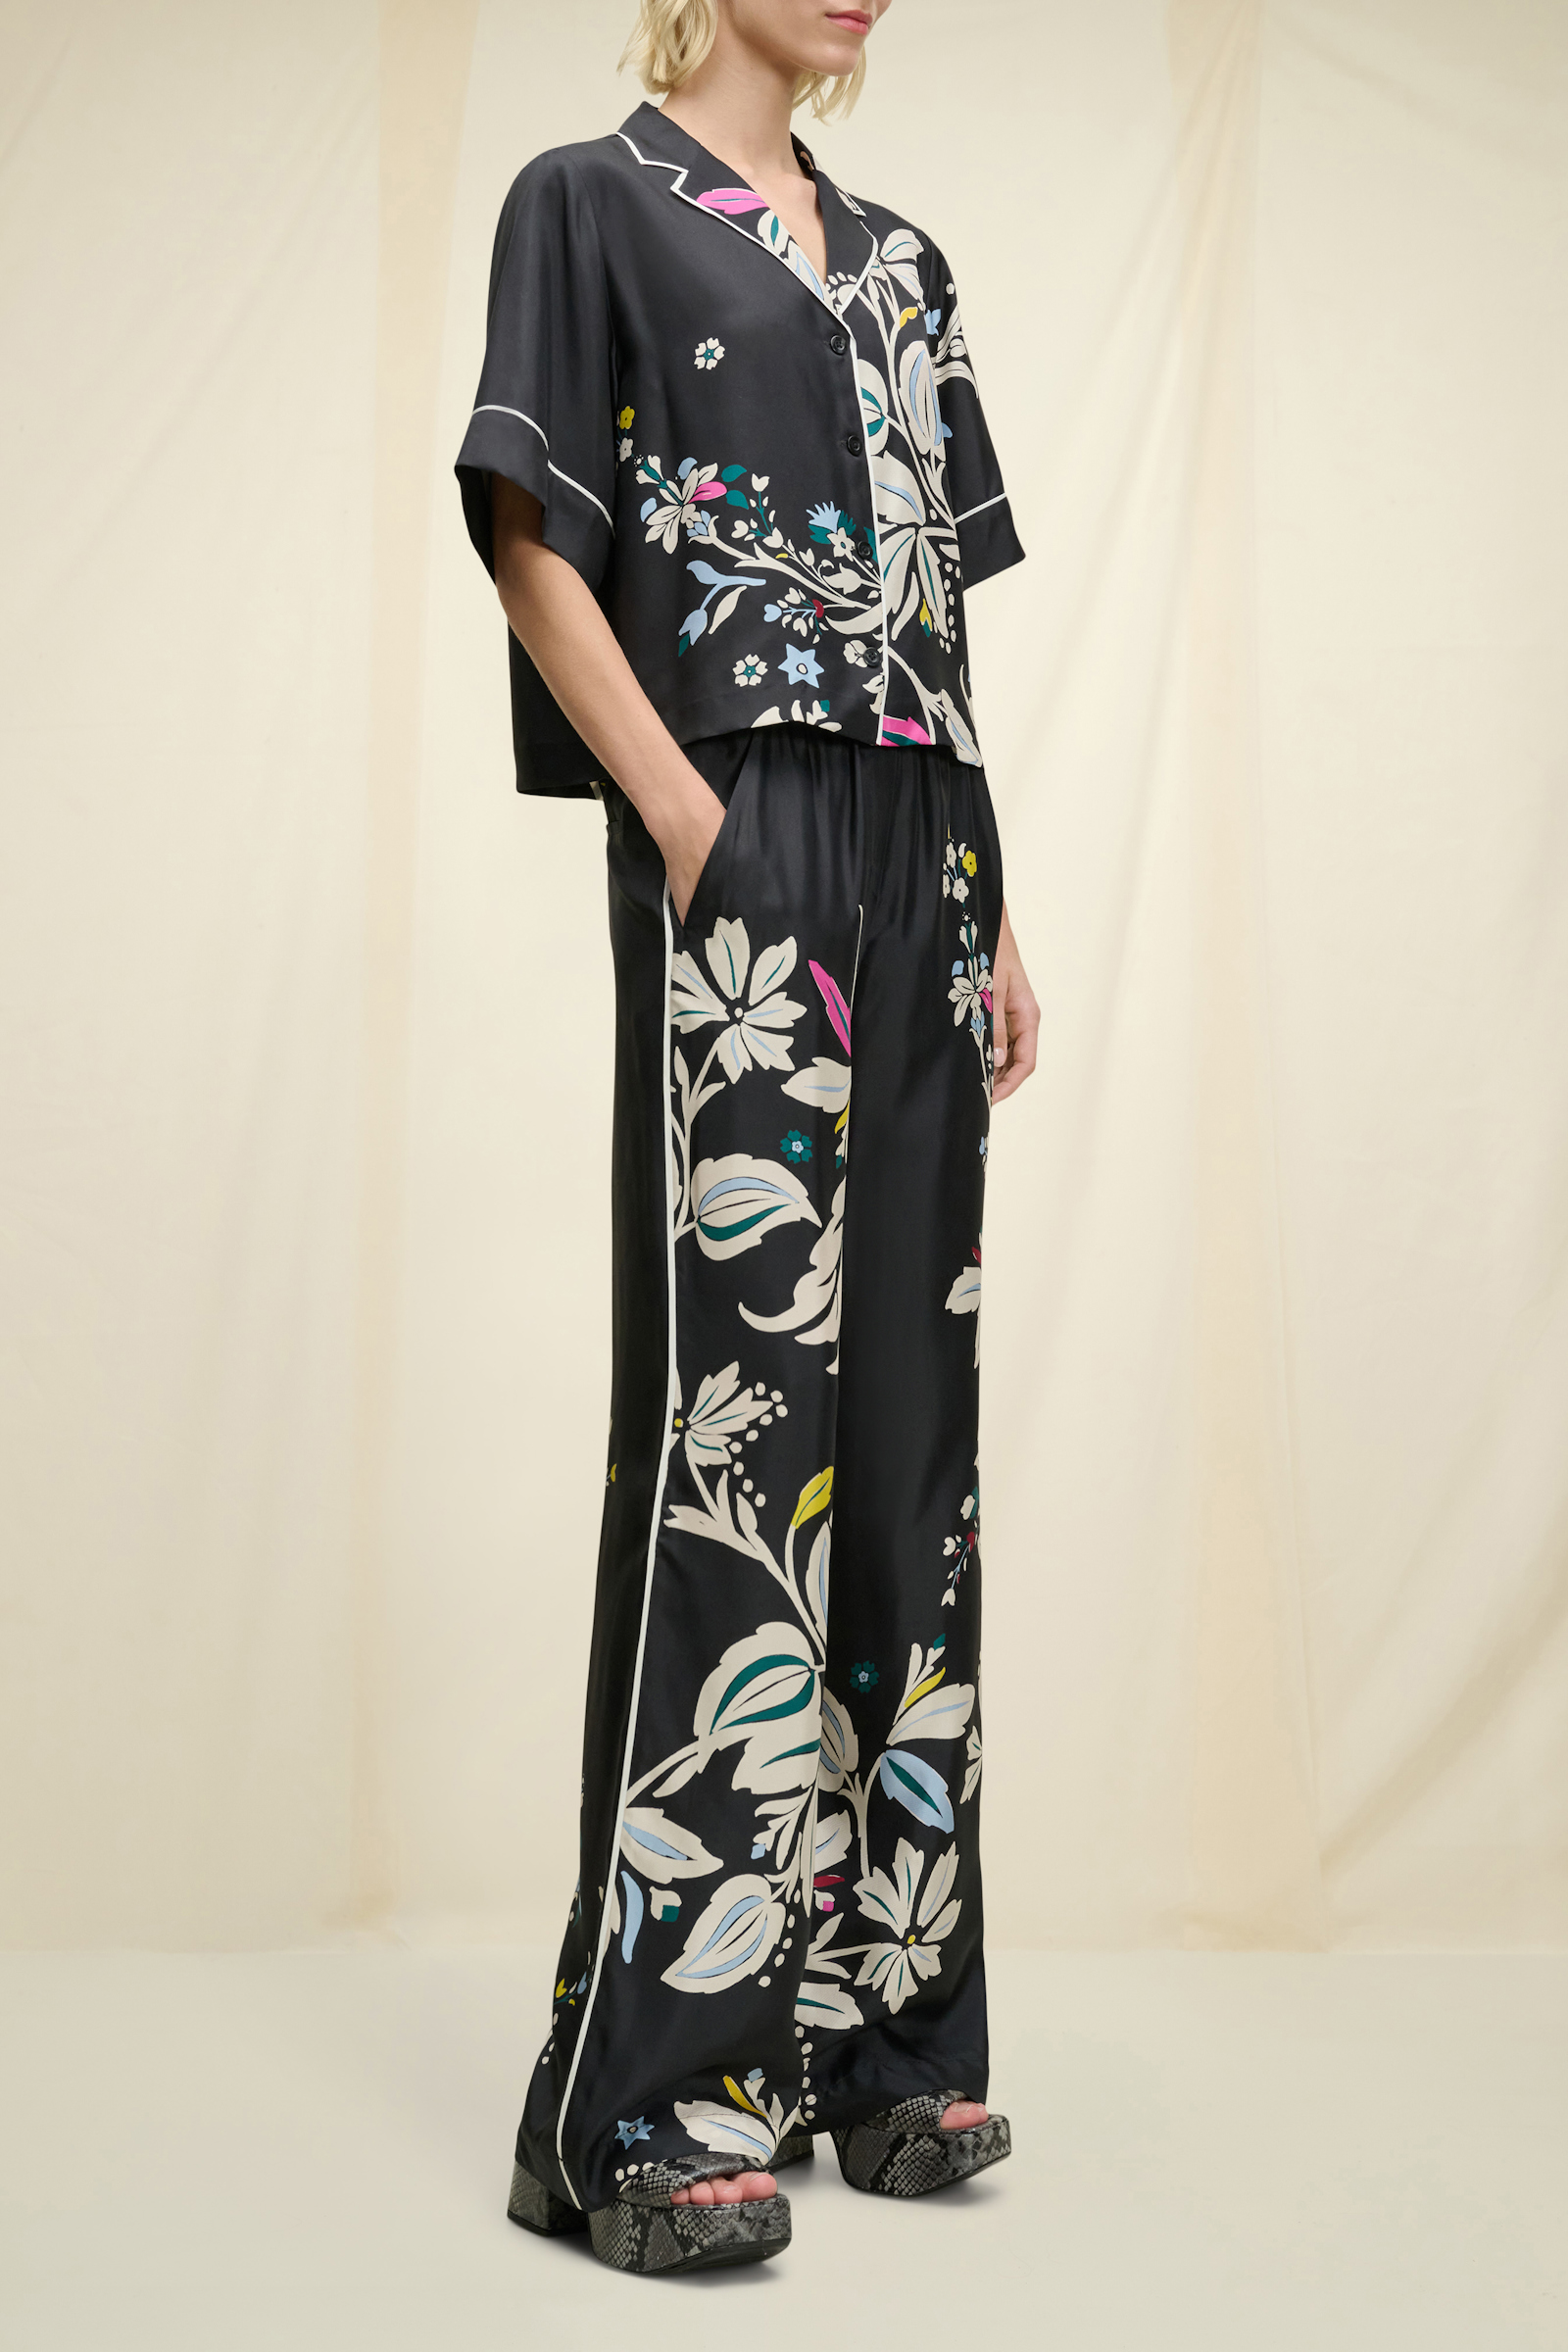 Dorothee Schumacher Pyjama-Style Bluse aus Seide black mix